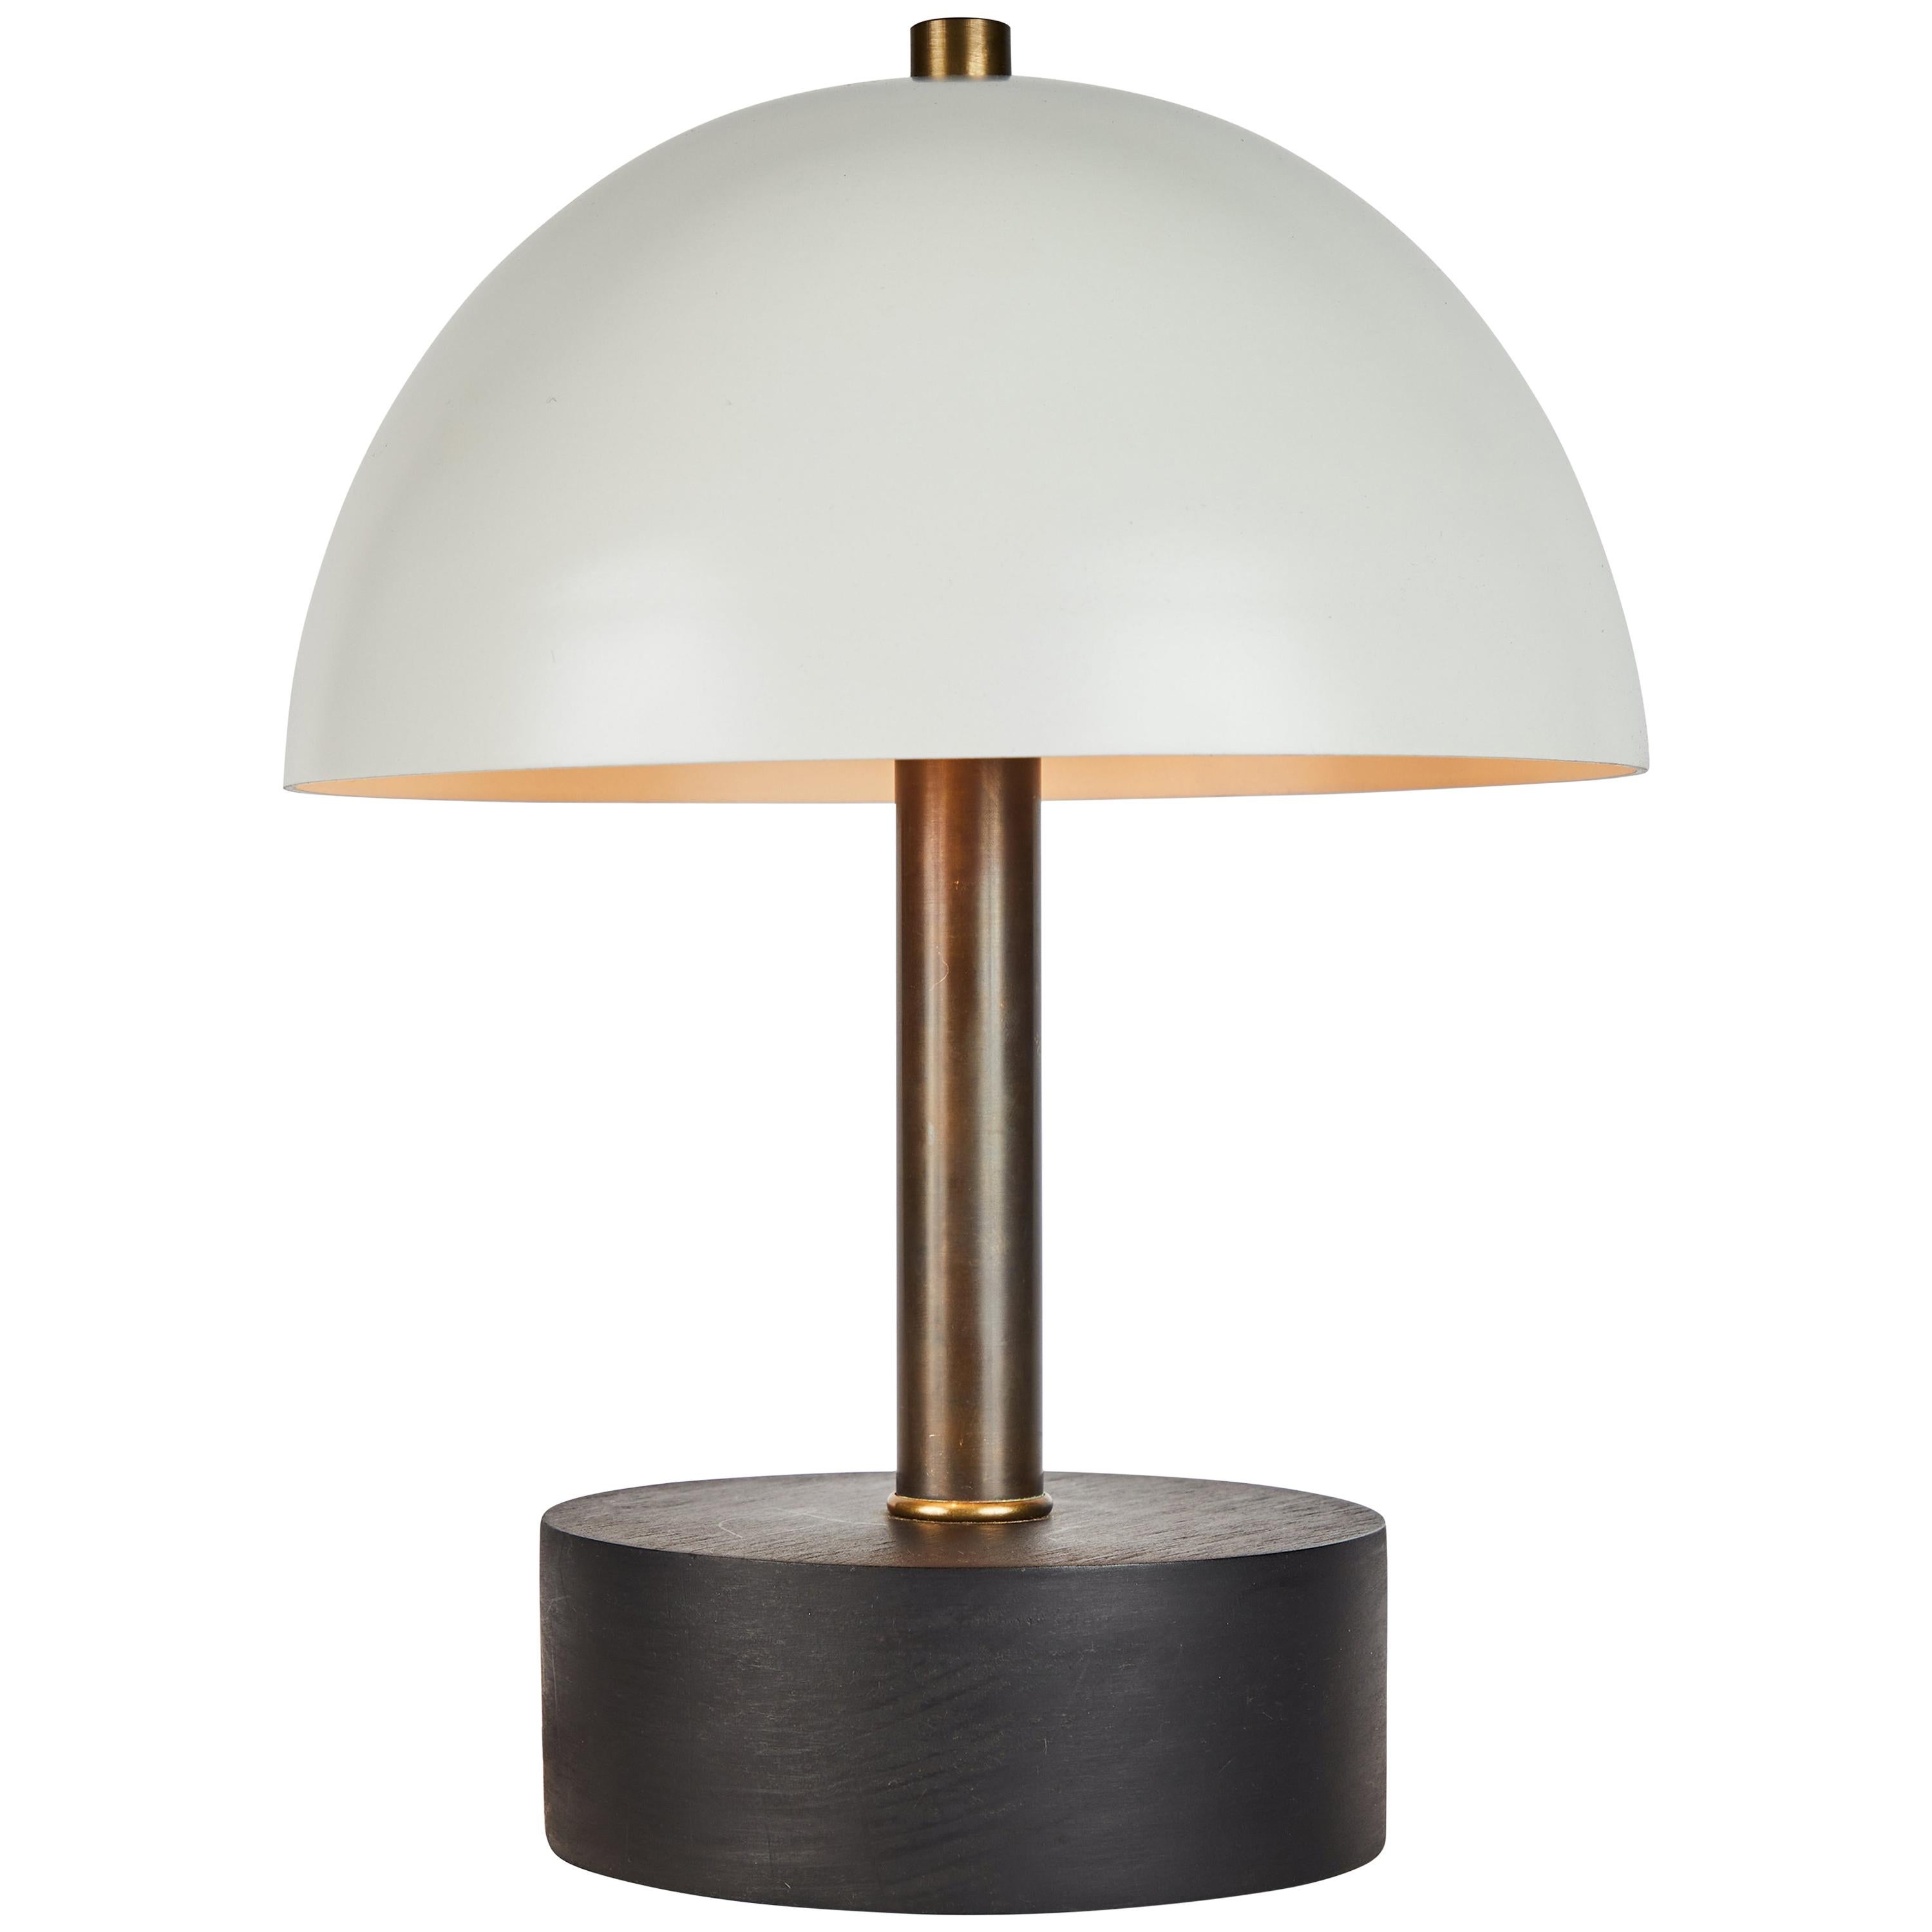 'Nena' Table Lamp in White Metal and Wood by Alvaro Benitez